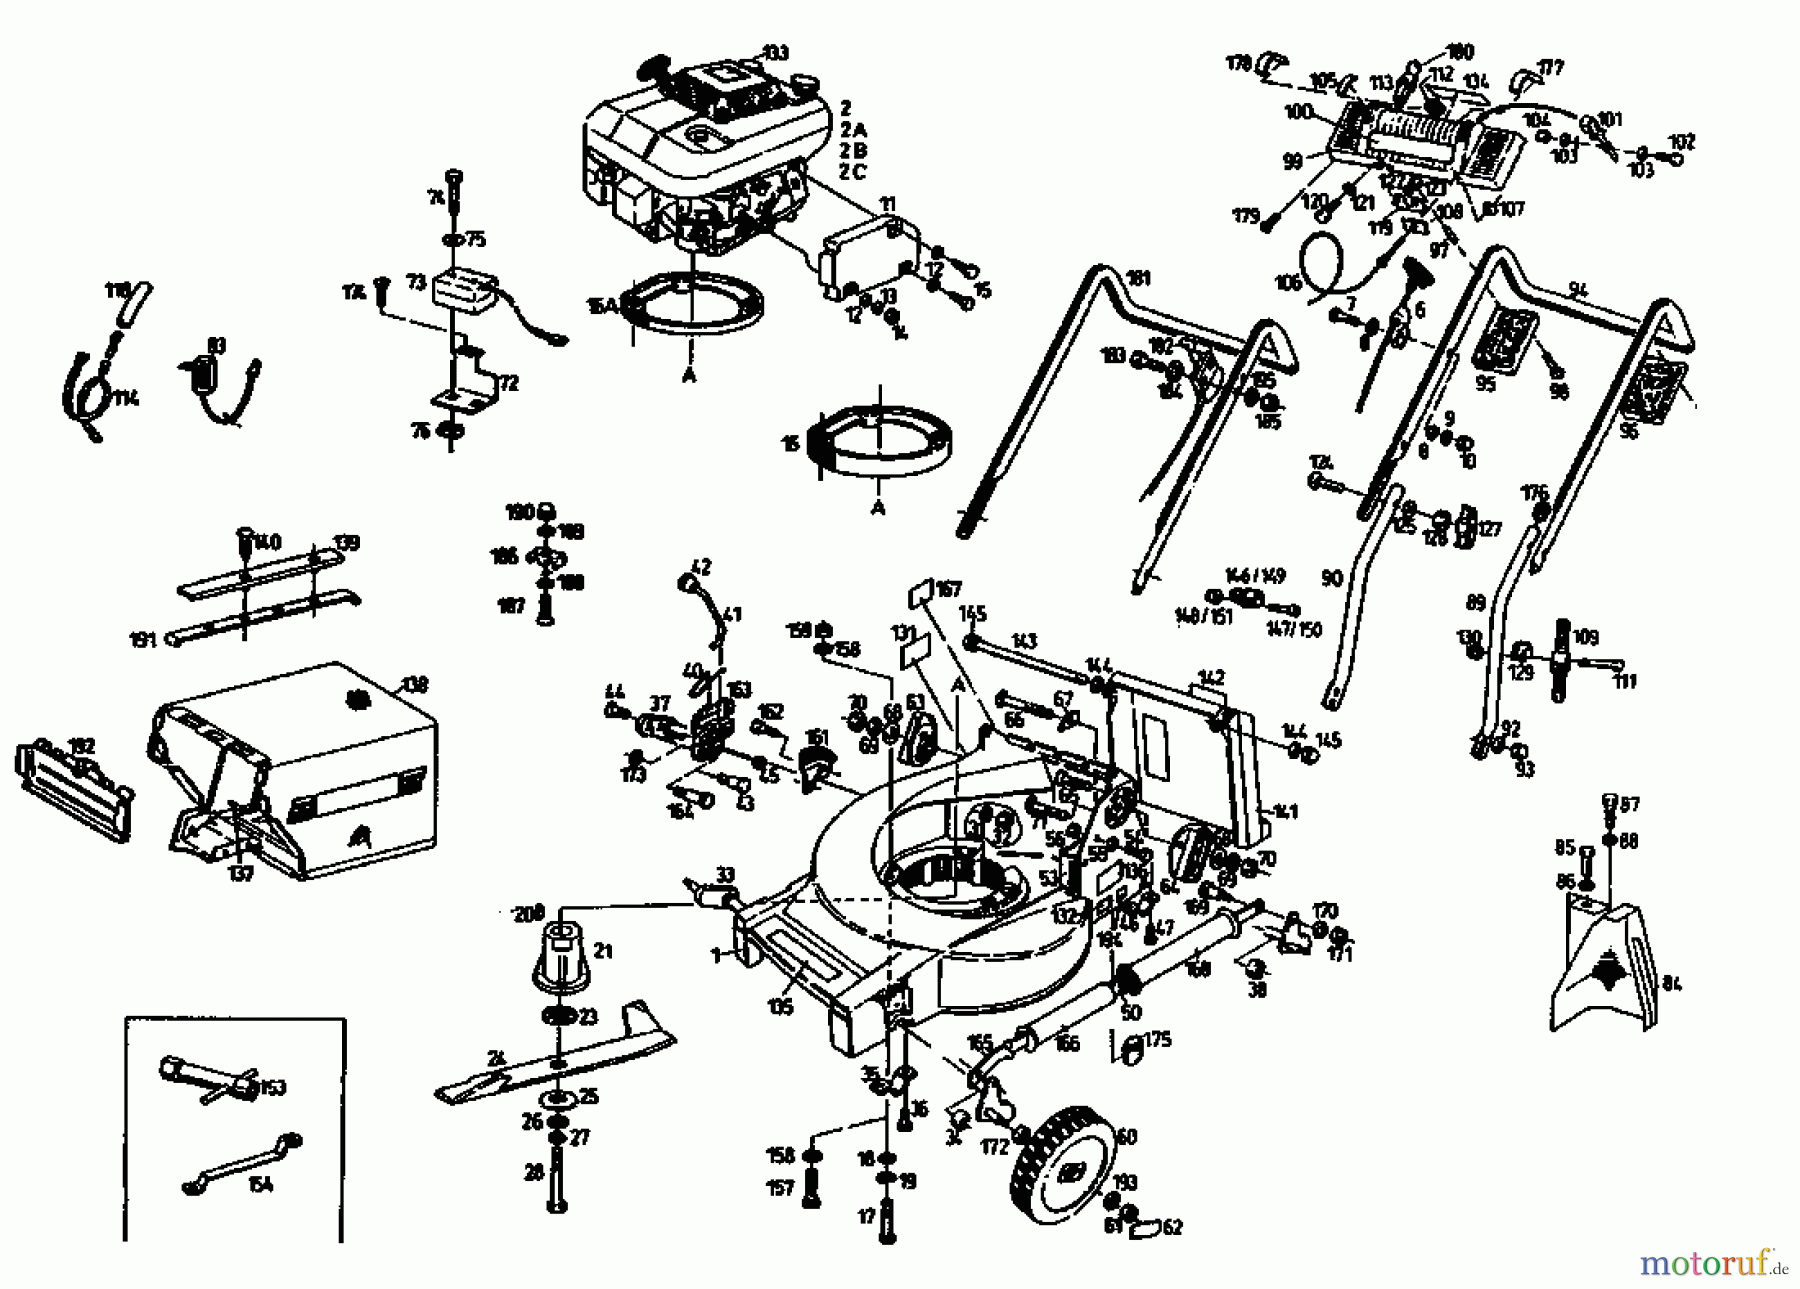  Gutbrod Petrol mower MH 454 T 04004.04  (1993) Basic machine